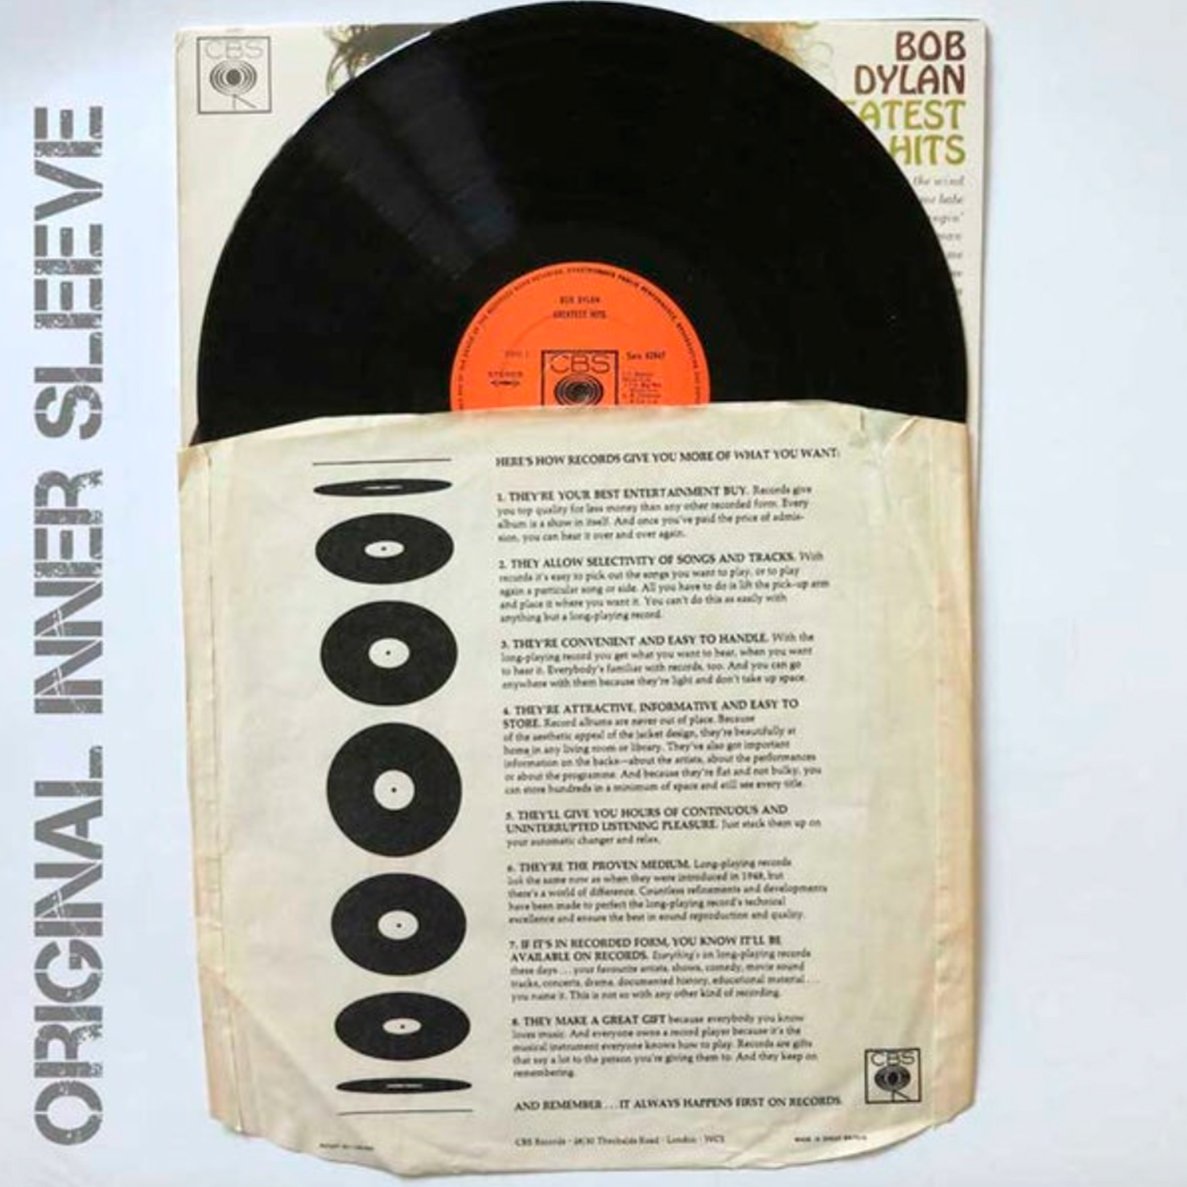 1960s Vinyl Record Manifesto - The Sense of Doubt - Vinyl Record 60s Manifesto - The Sense of Doubt